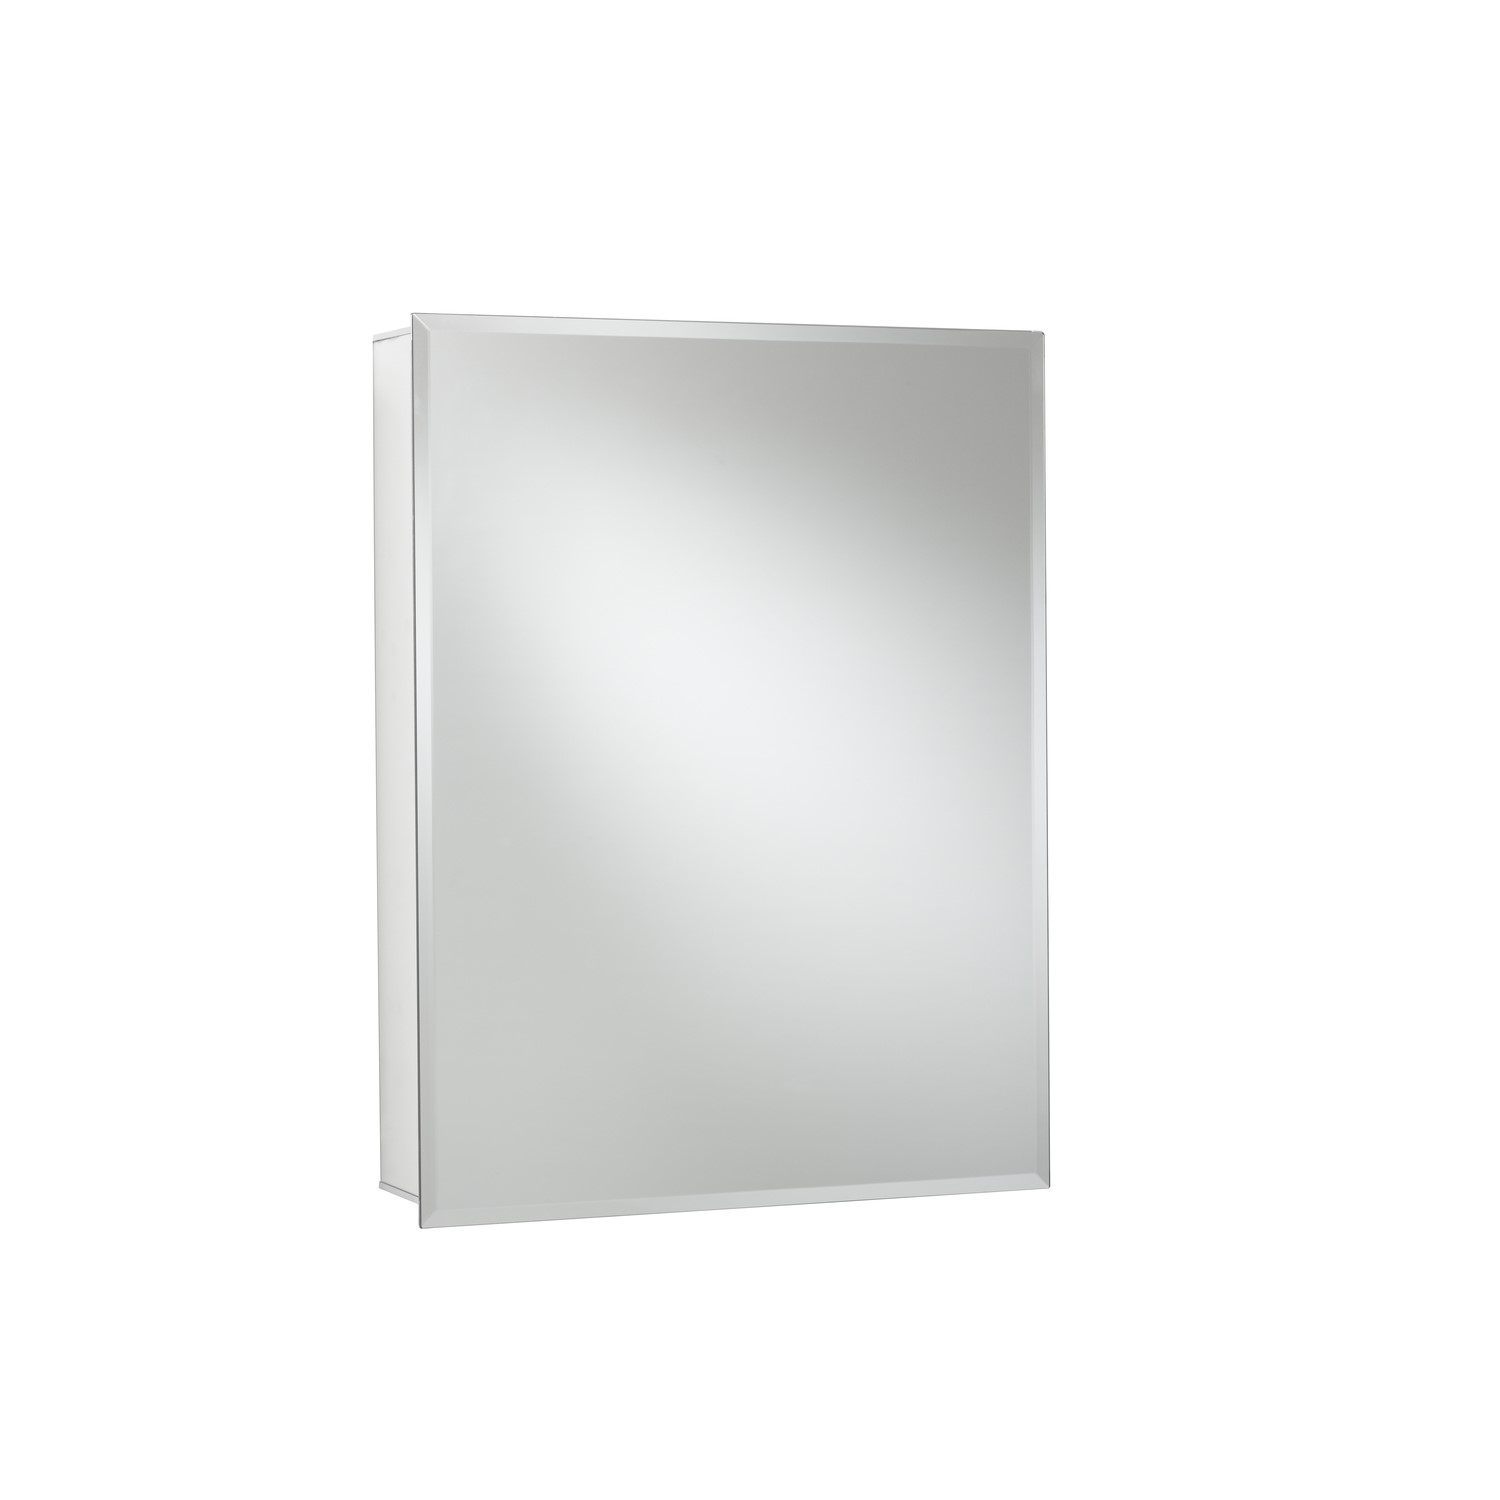 Chrome Mirrored Wall Bathroom Cabinet 610 x 760mm - Croydex